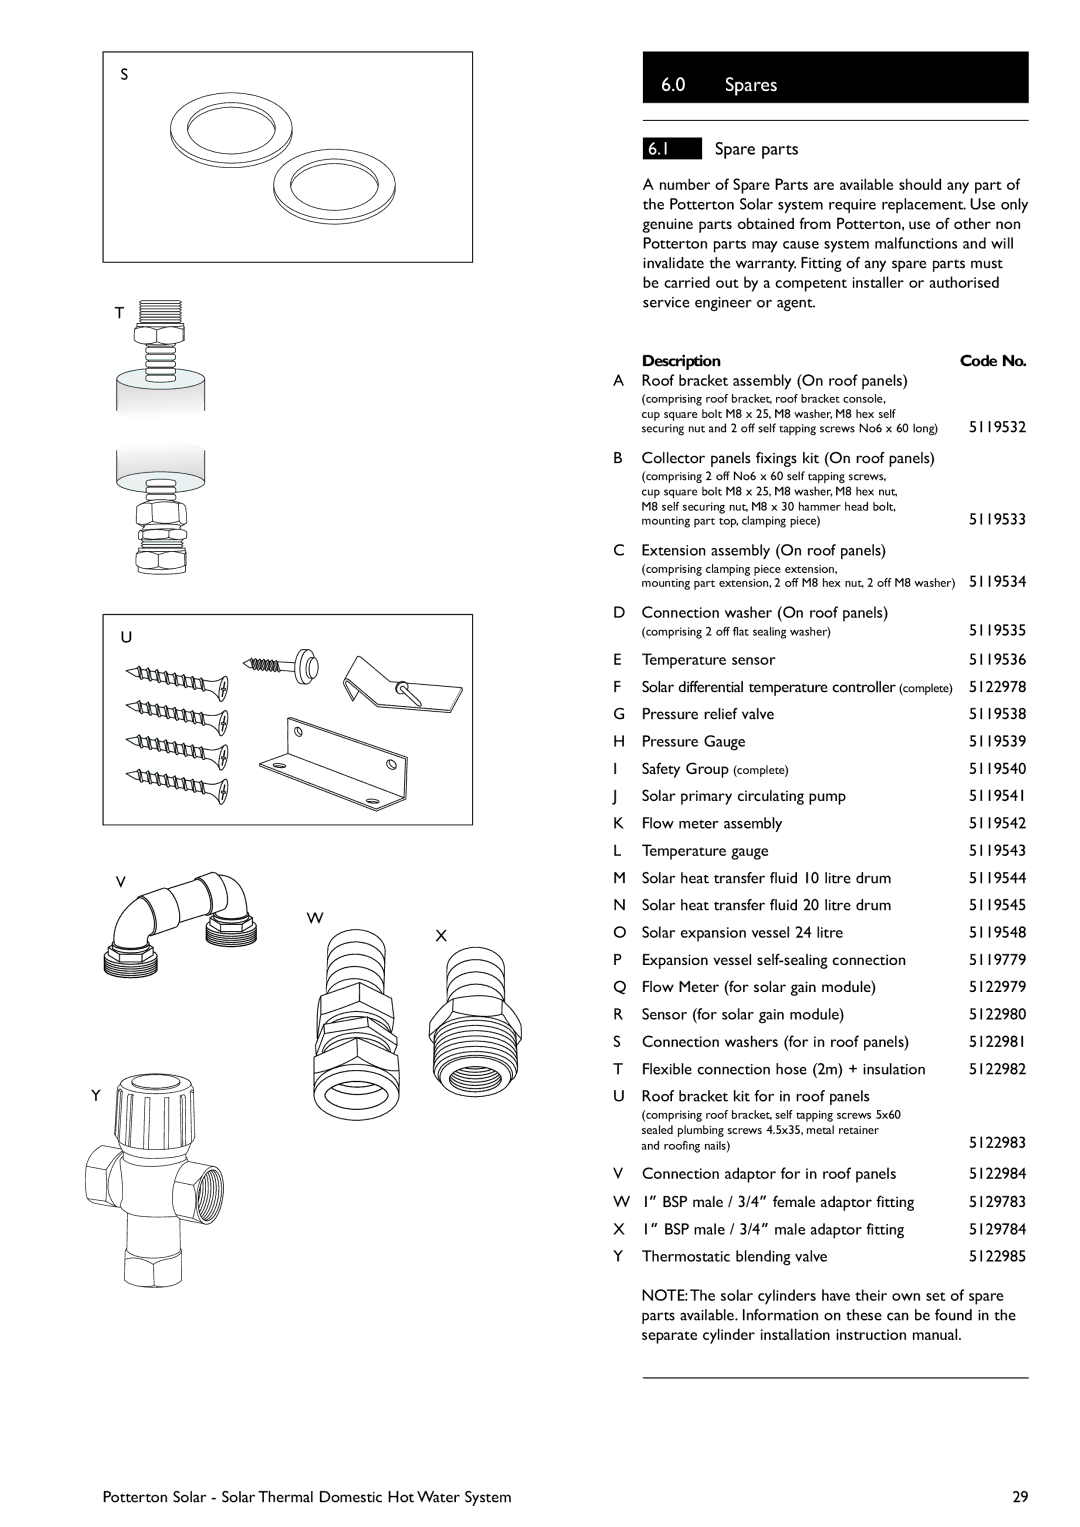 Baxi Potterton Solar manual Spare parts, Description CodeNo 